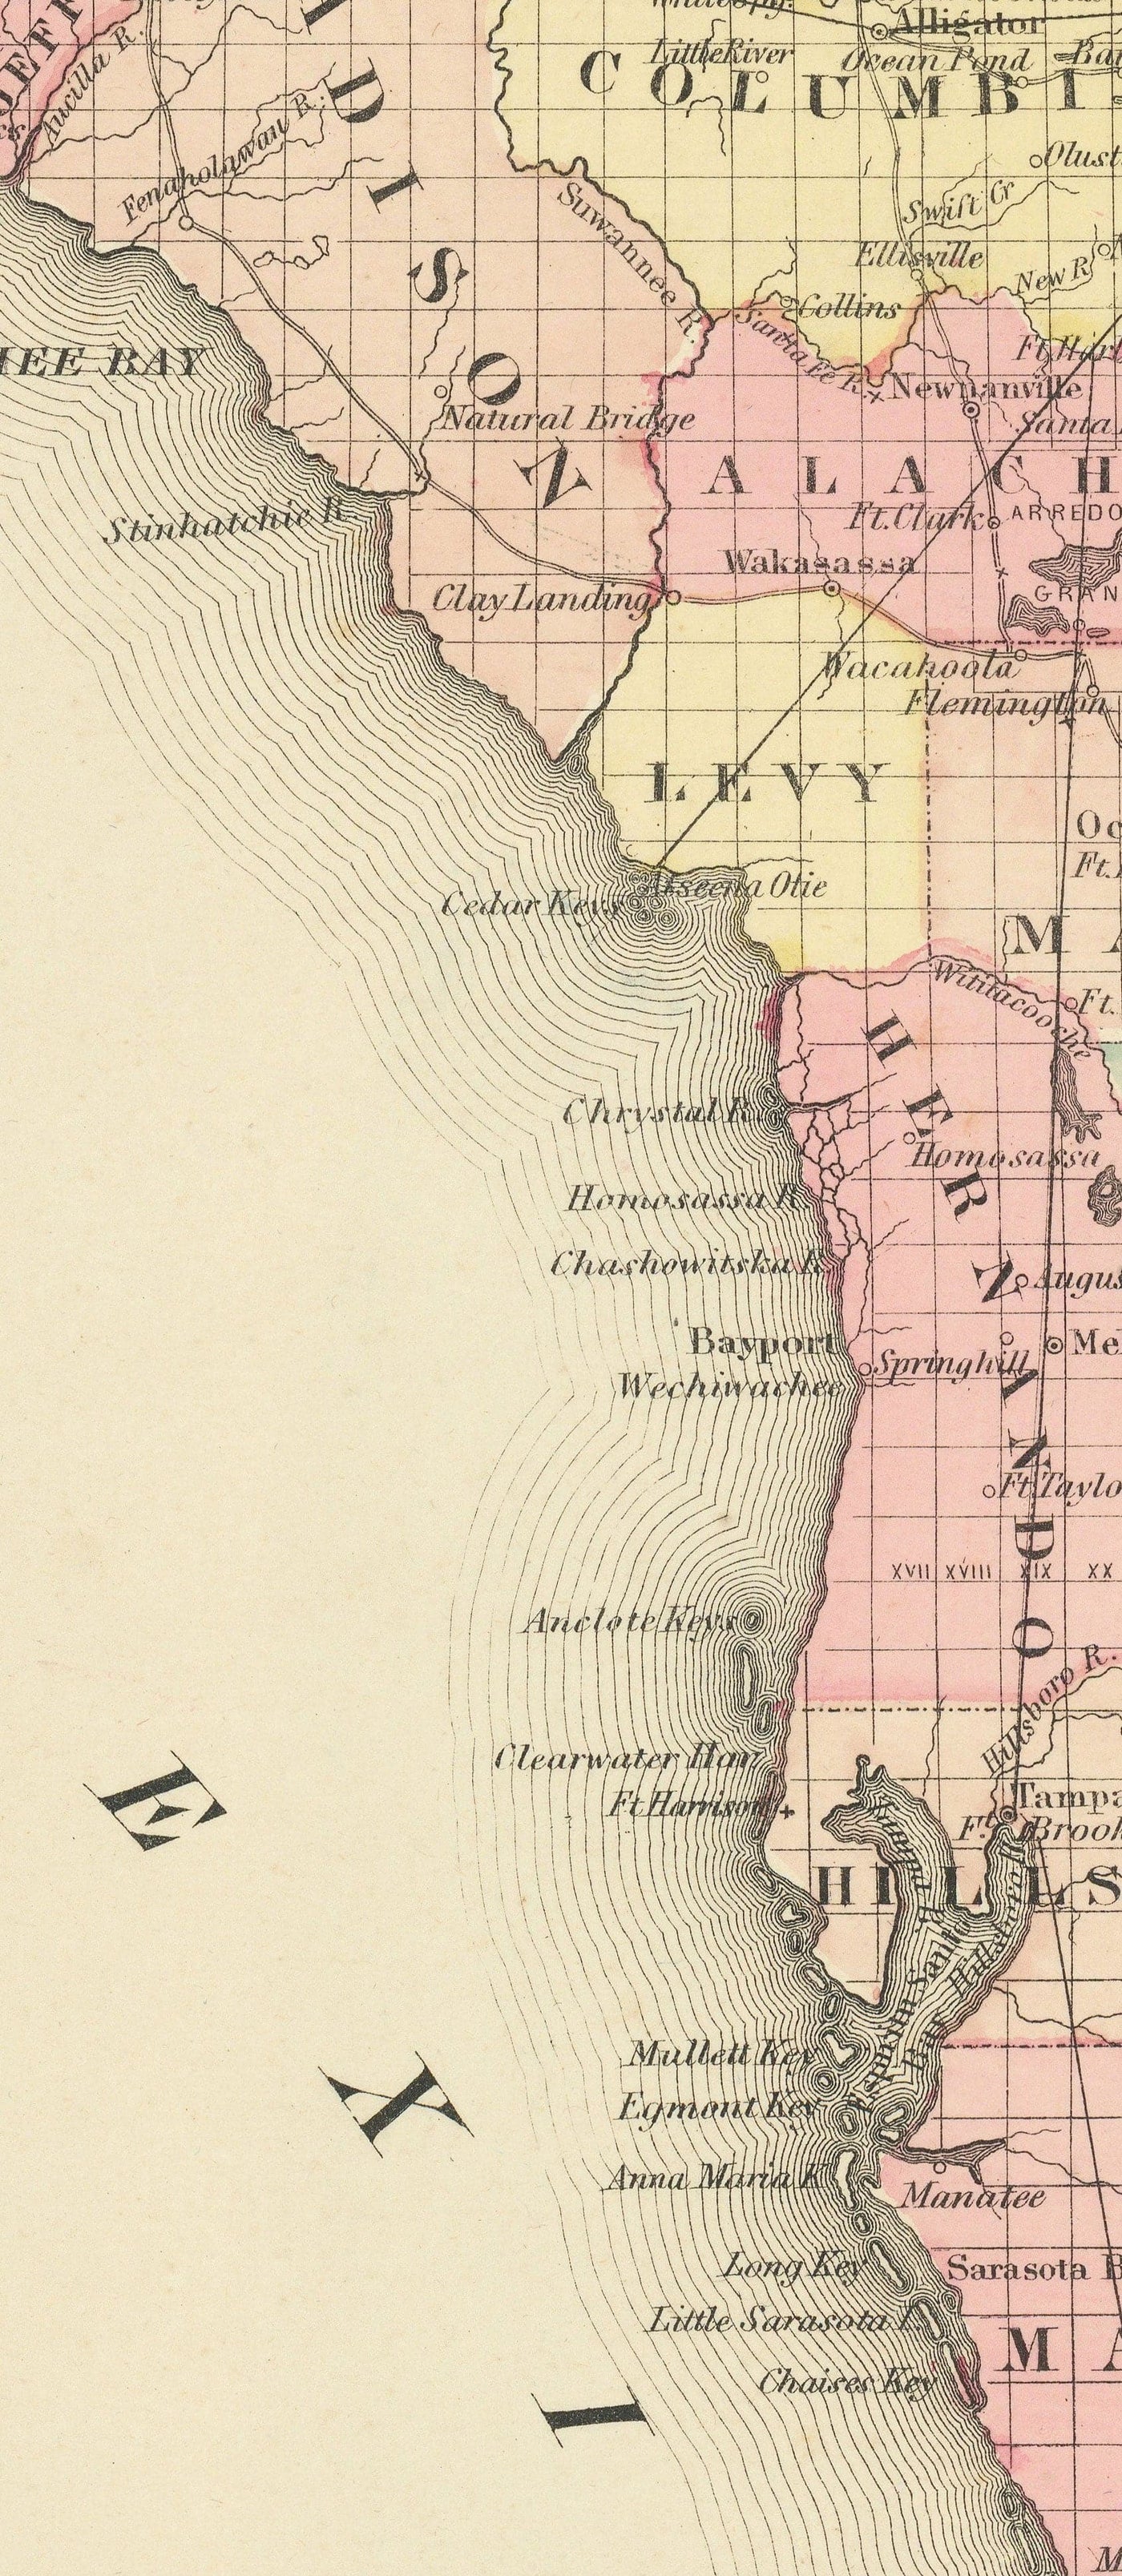 Alte Karte von Florida 1855 von Colton - Keys, Panhandle, Jacksonville, Tampa, Dade, Tallahassee, Ft Lauderdale